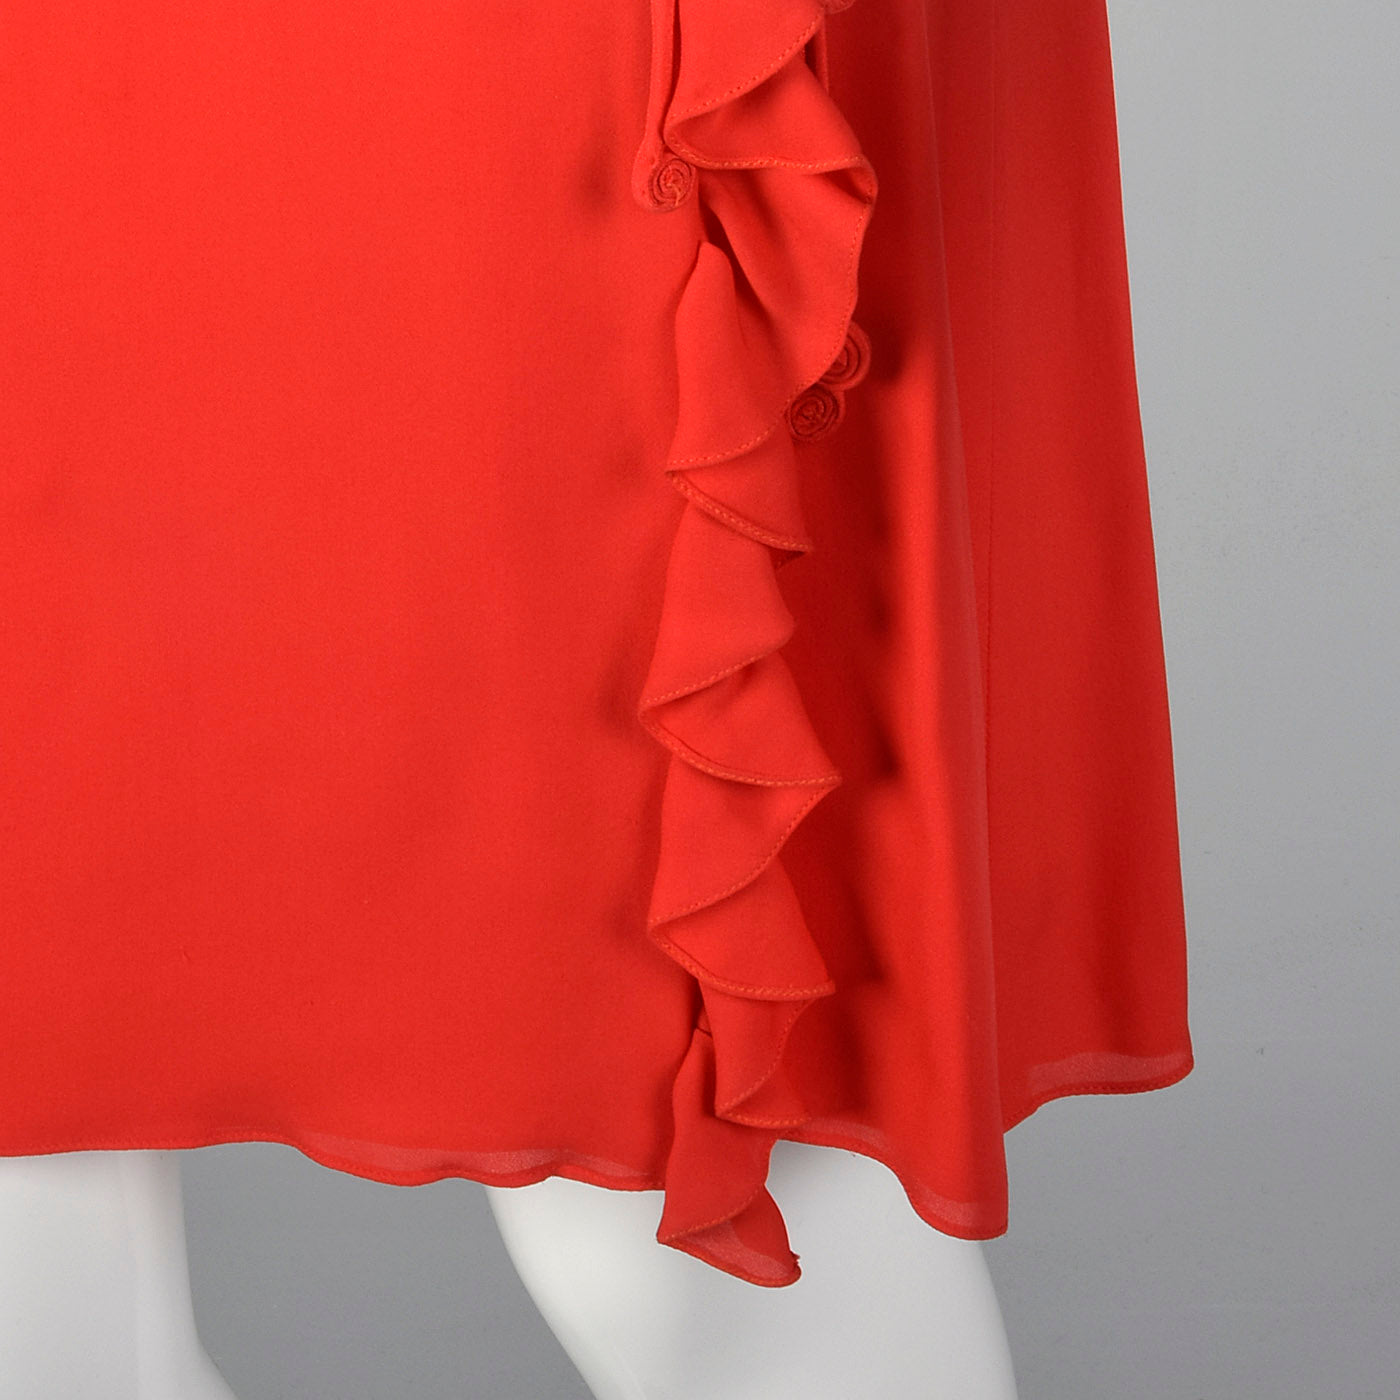 1990s Carolina Herrera Red Silk Dress with Wrap Skirt